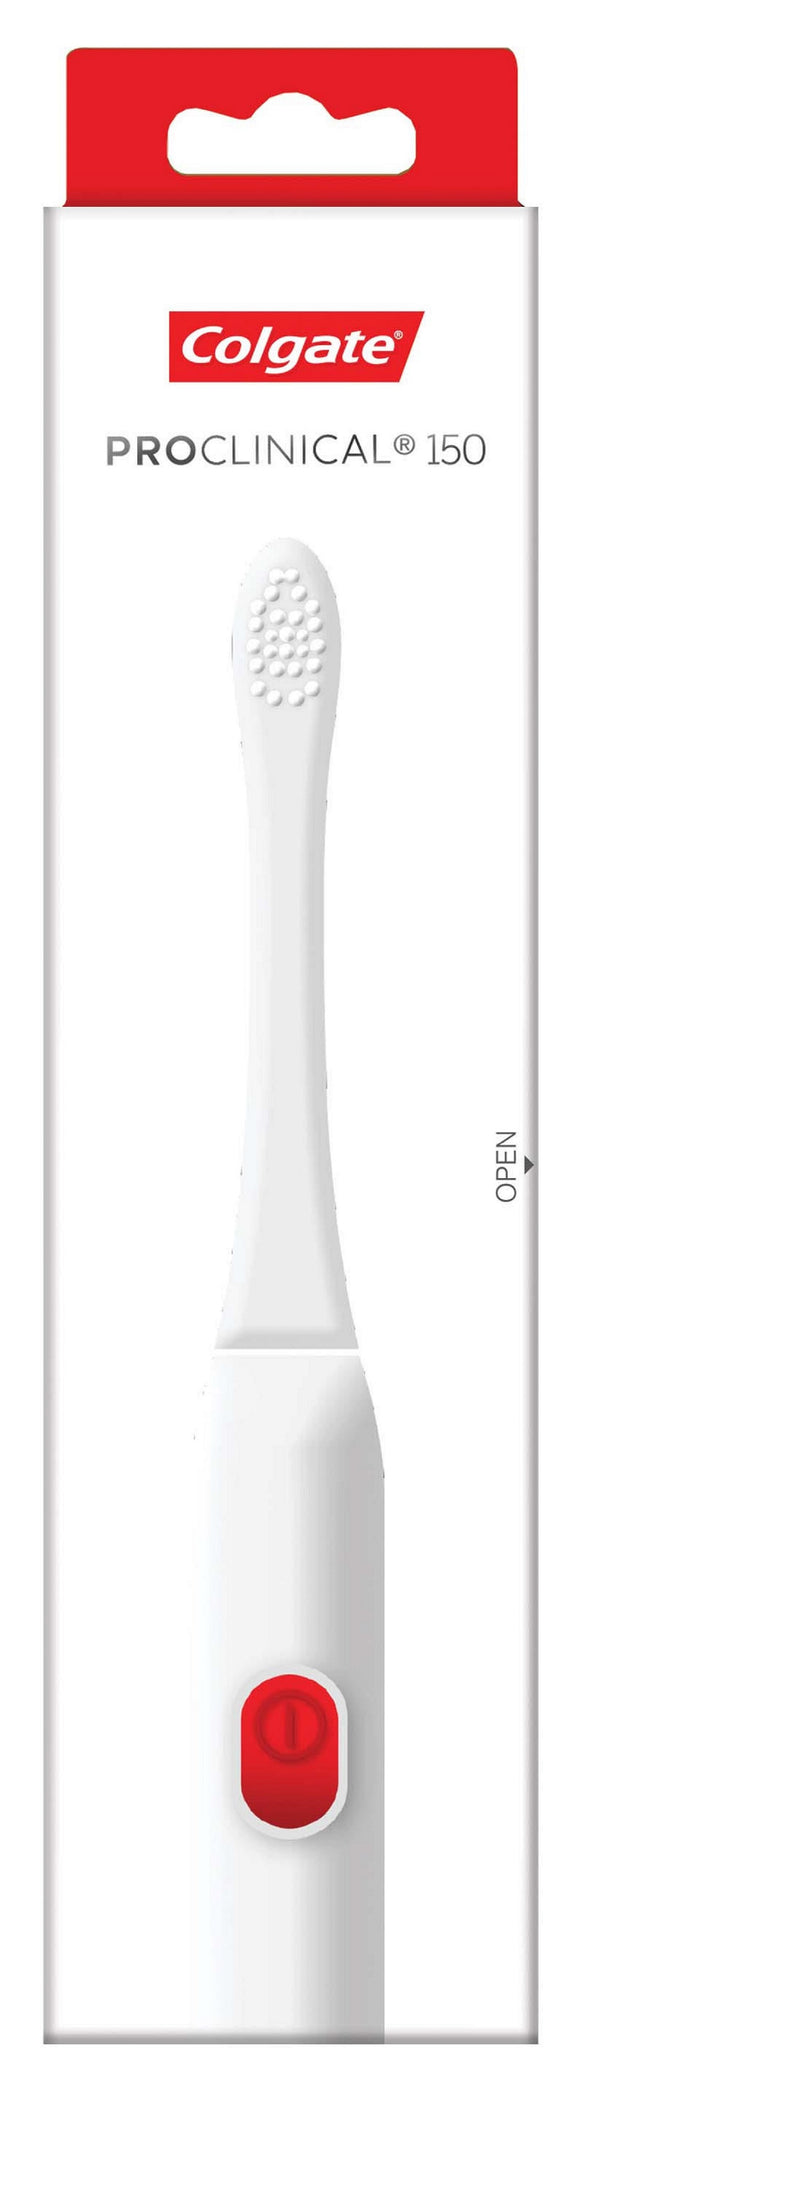 Colgate ProClinical B150 Sonic Toothbrush